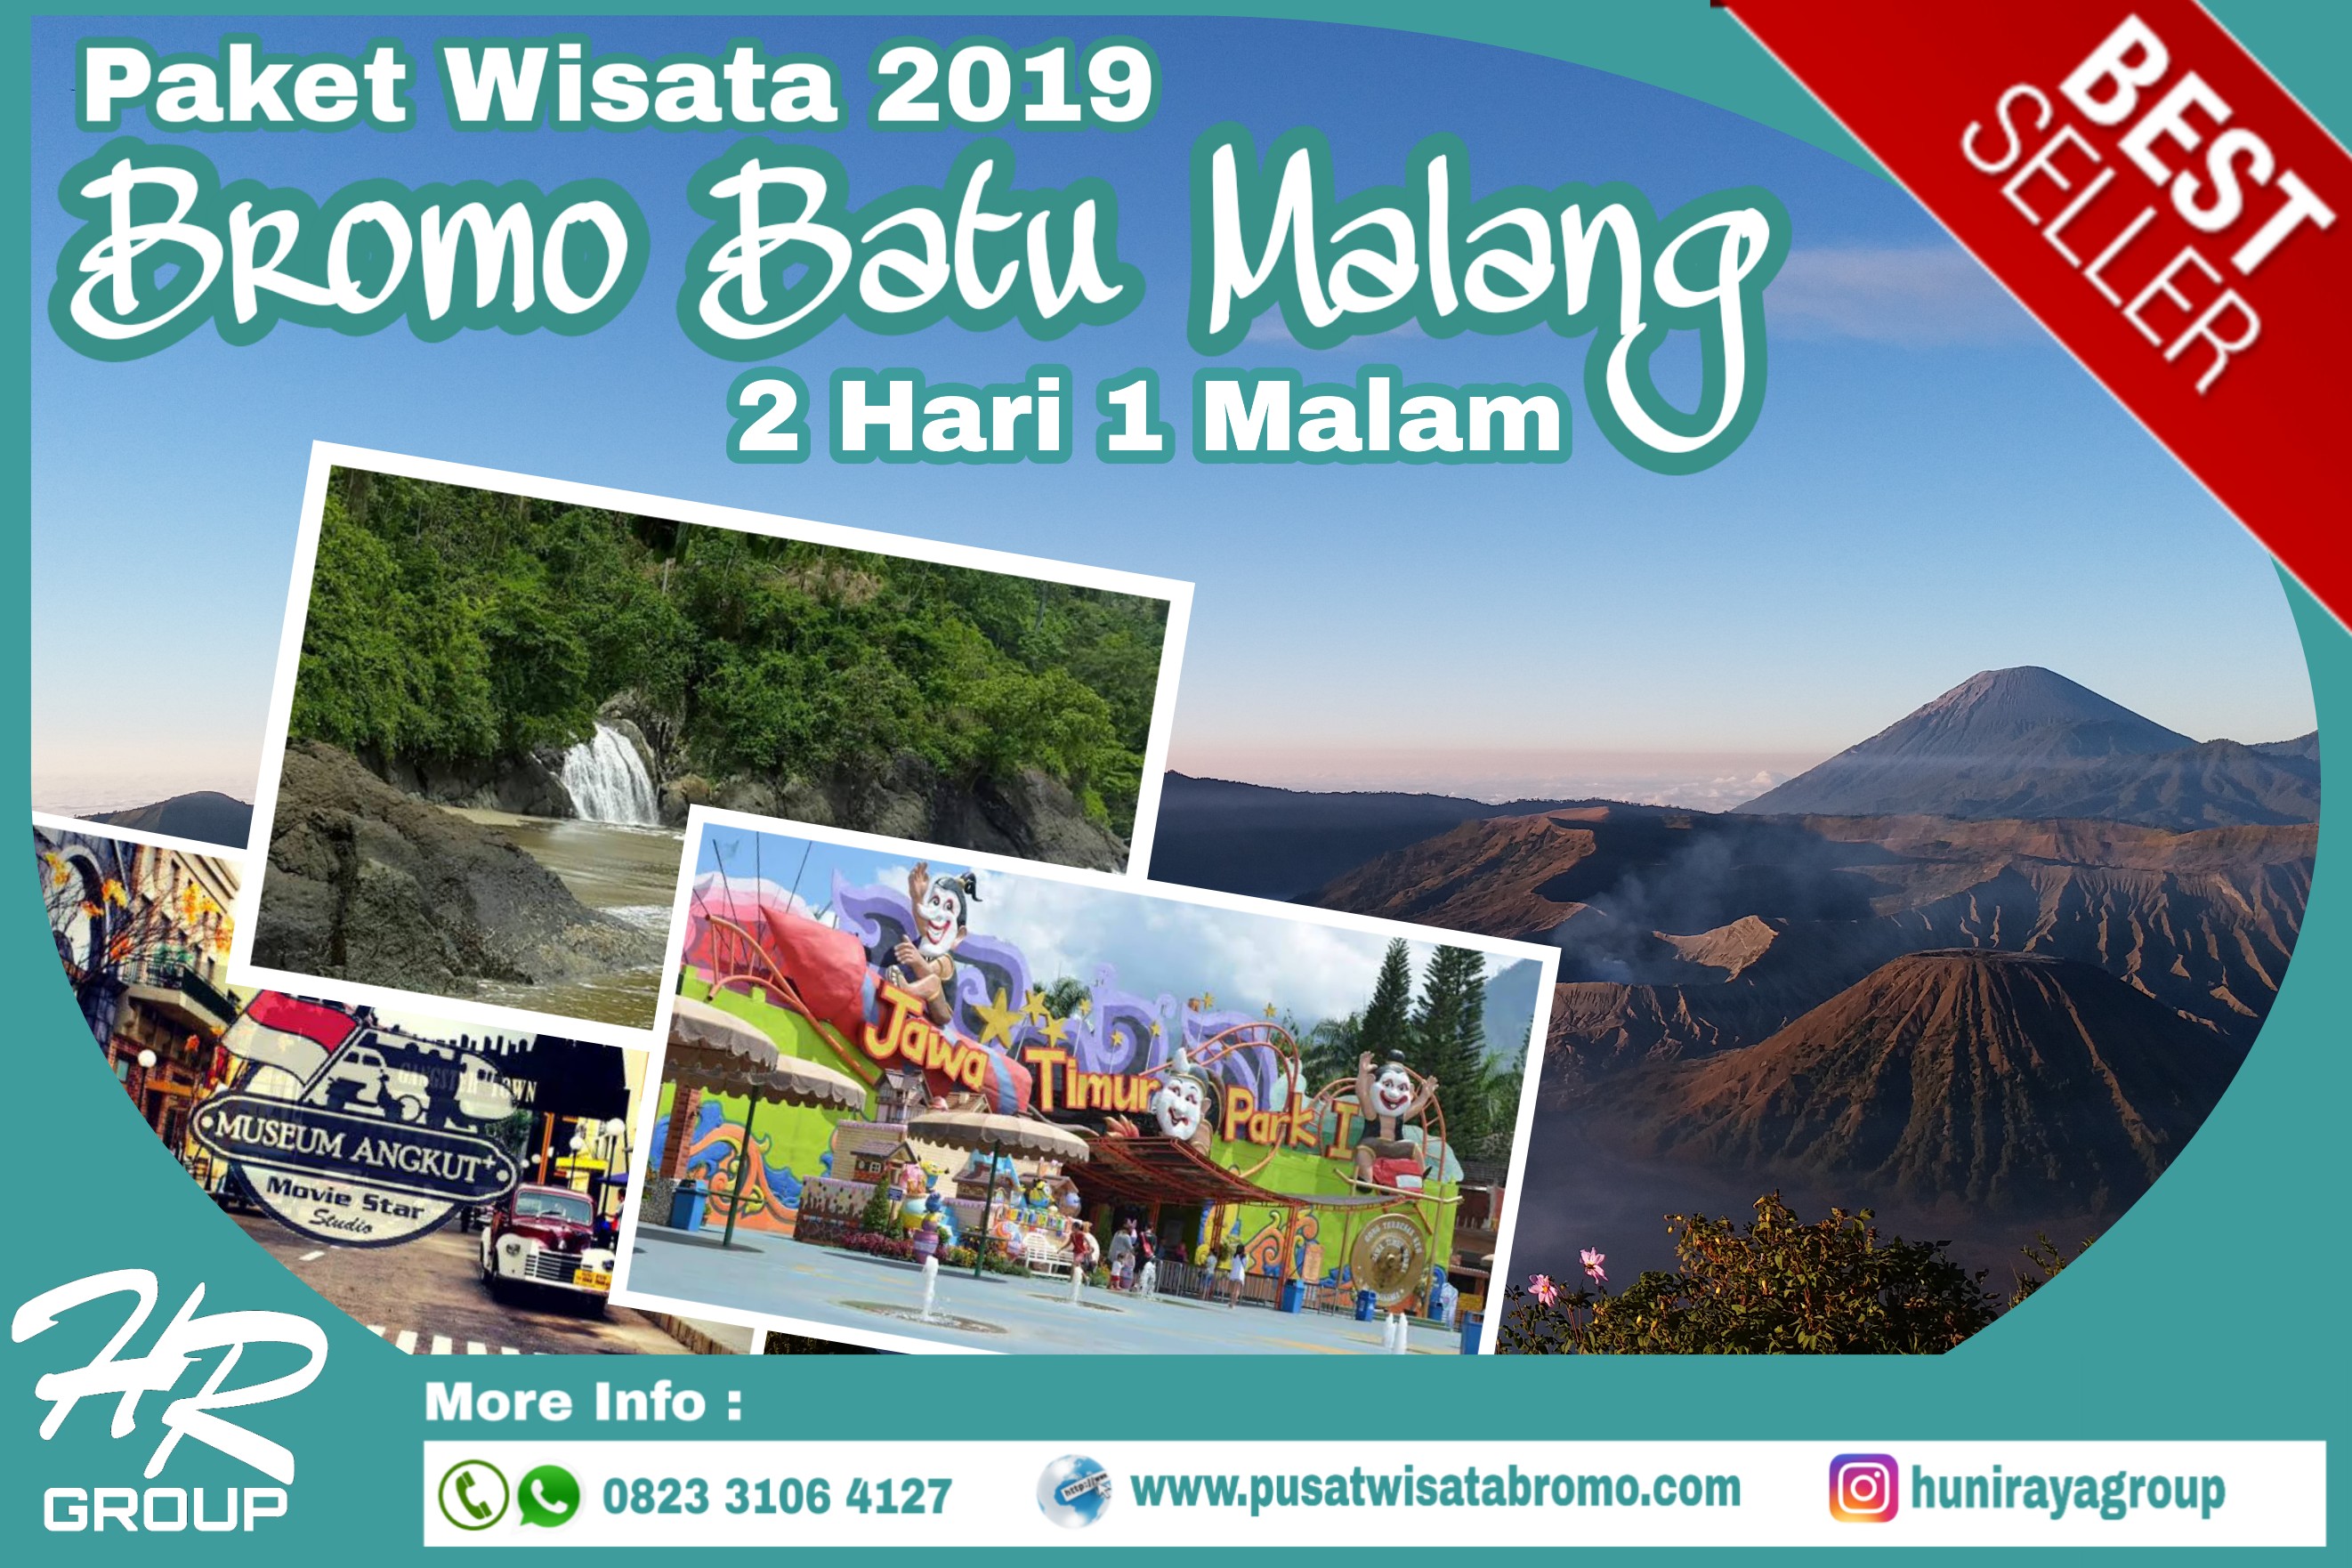 Paket Wisata Bromo Malang Batu 2 Hari 1 Malam terbaru 2019 | PusatWisataBromo.com By Huni Raya Group